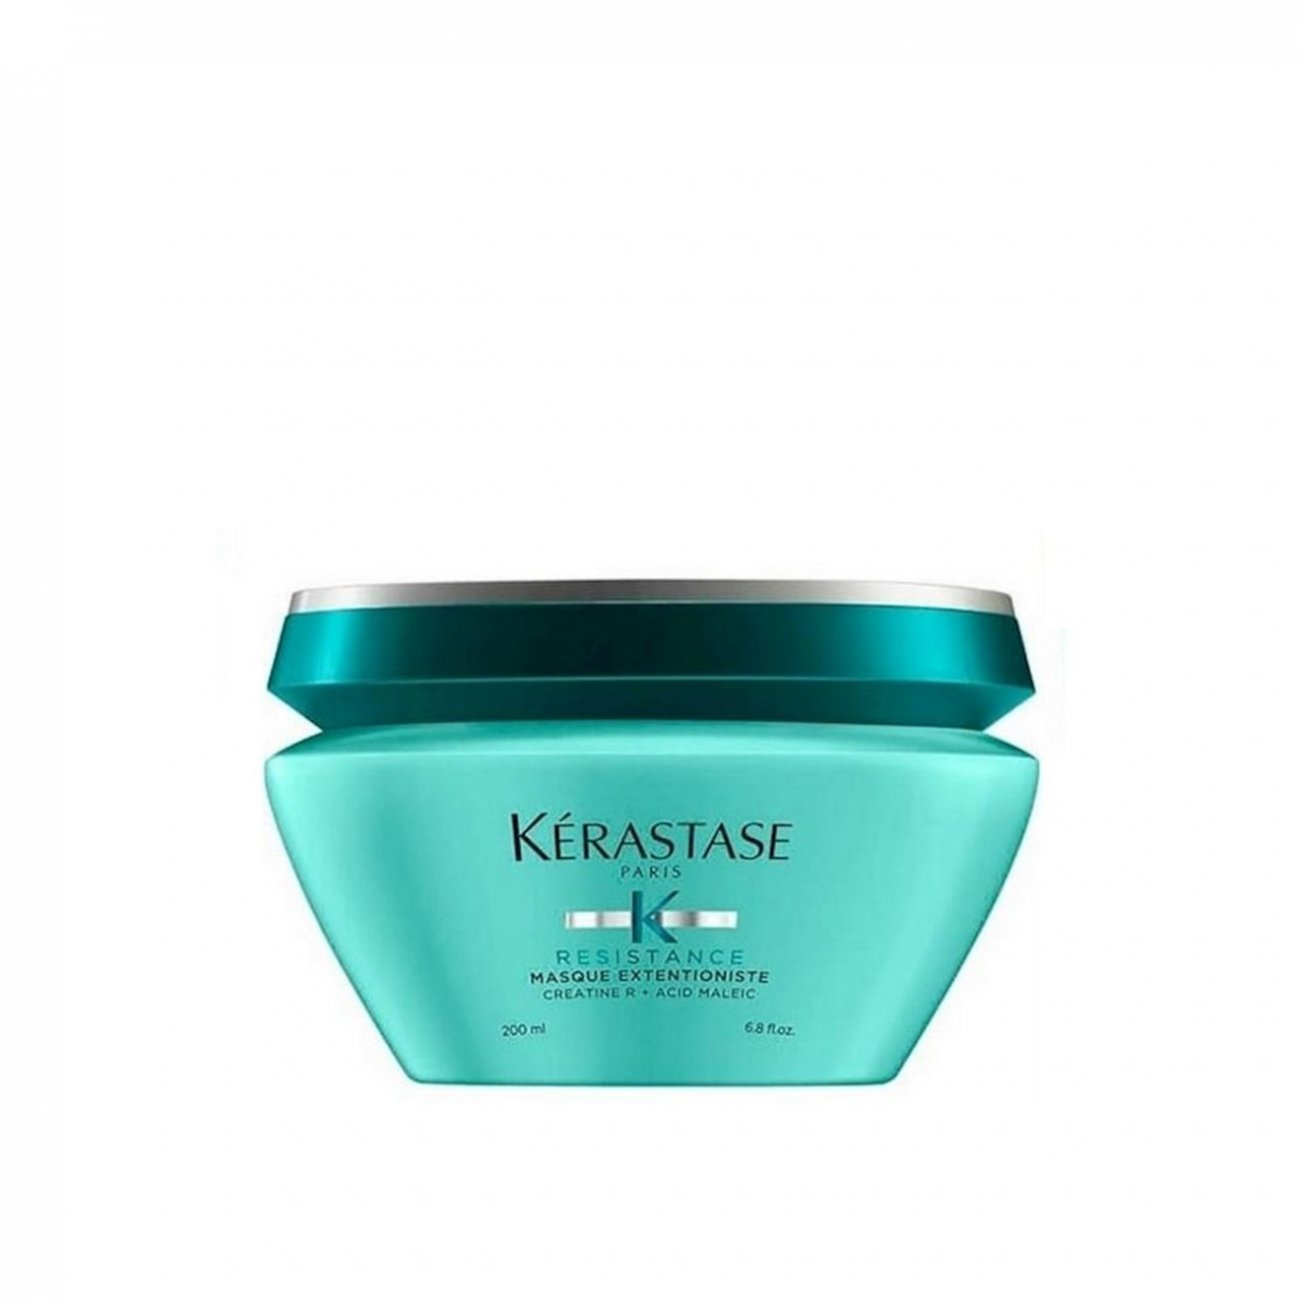 kandidat Næb gullig Buy Kérastase Resistance Masque Extentioniste Hair Mask 200ml (6.76fl oz) ·  USA